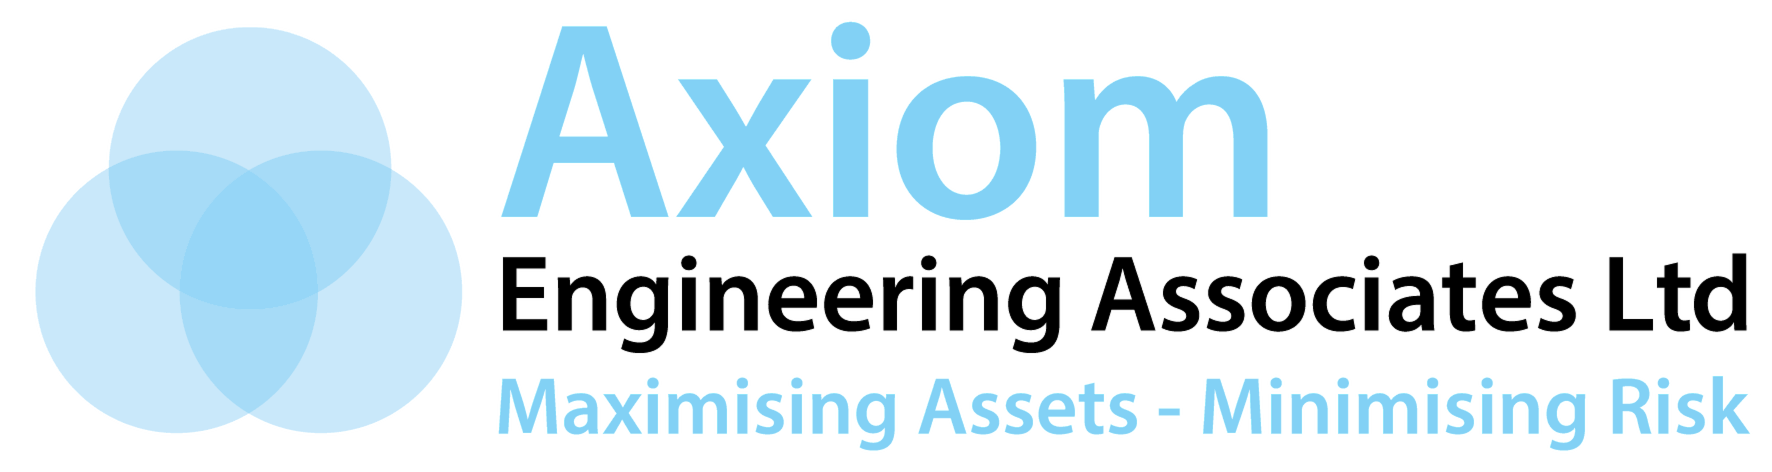 Axiom Engineering Associates Ltd